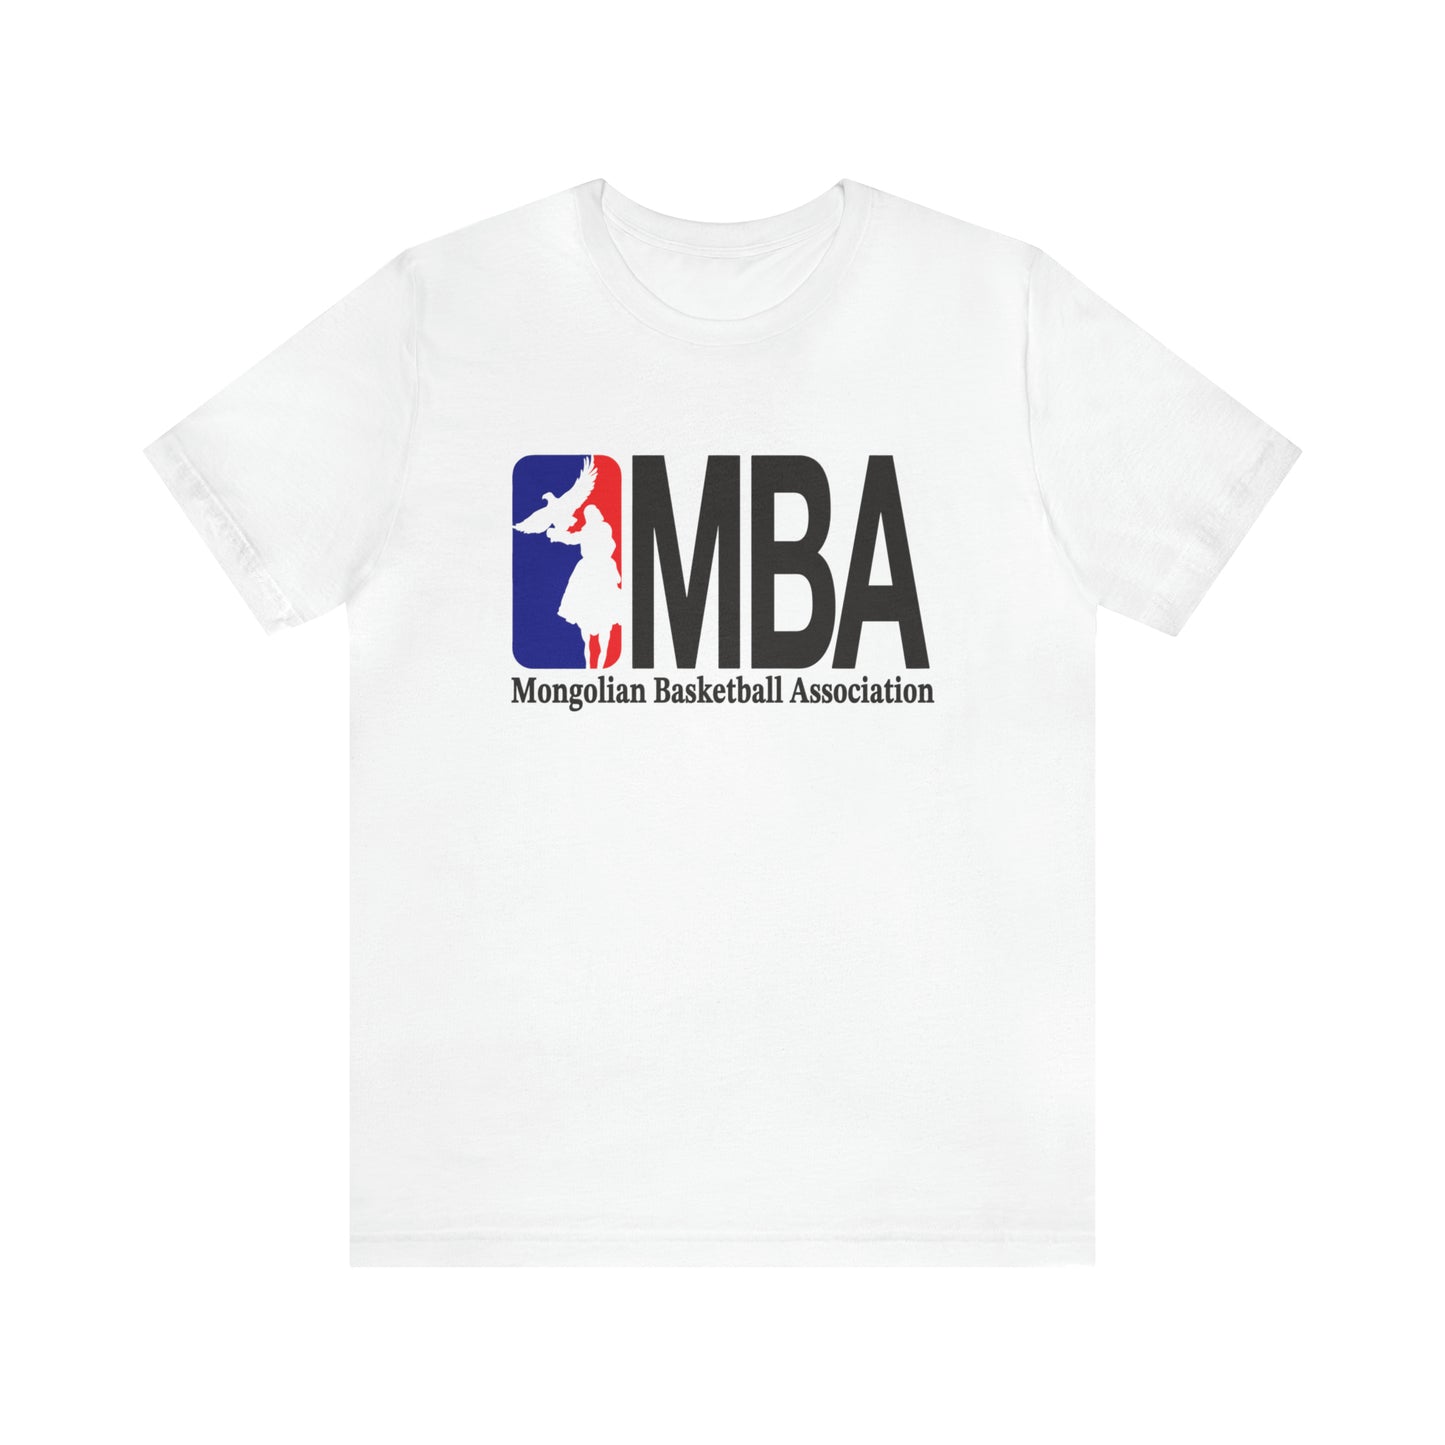 MBA T-shirt